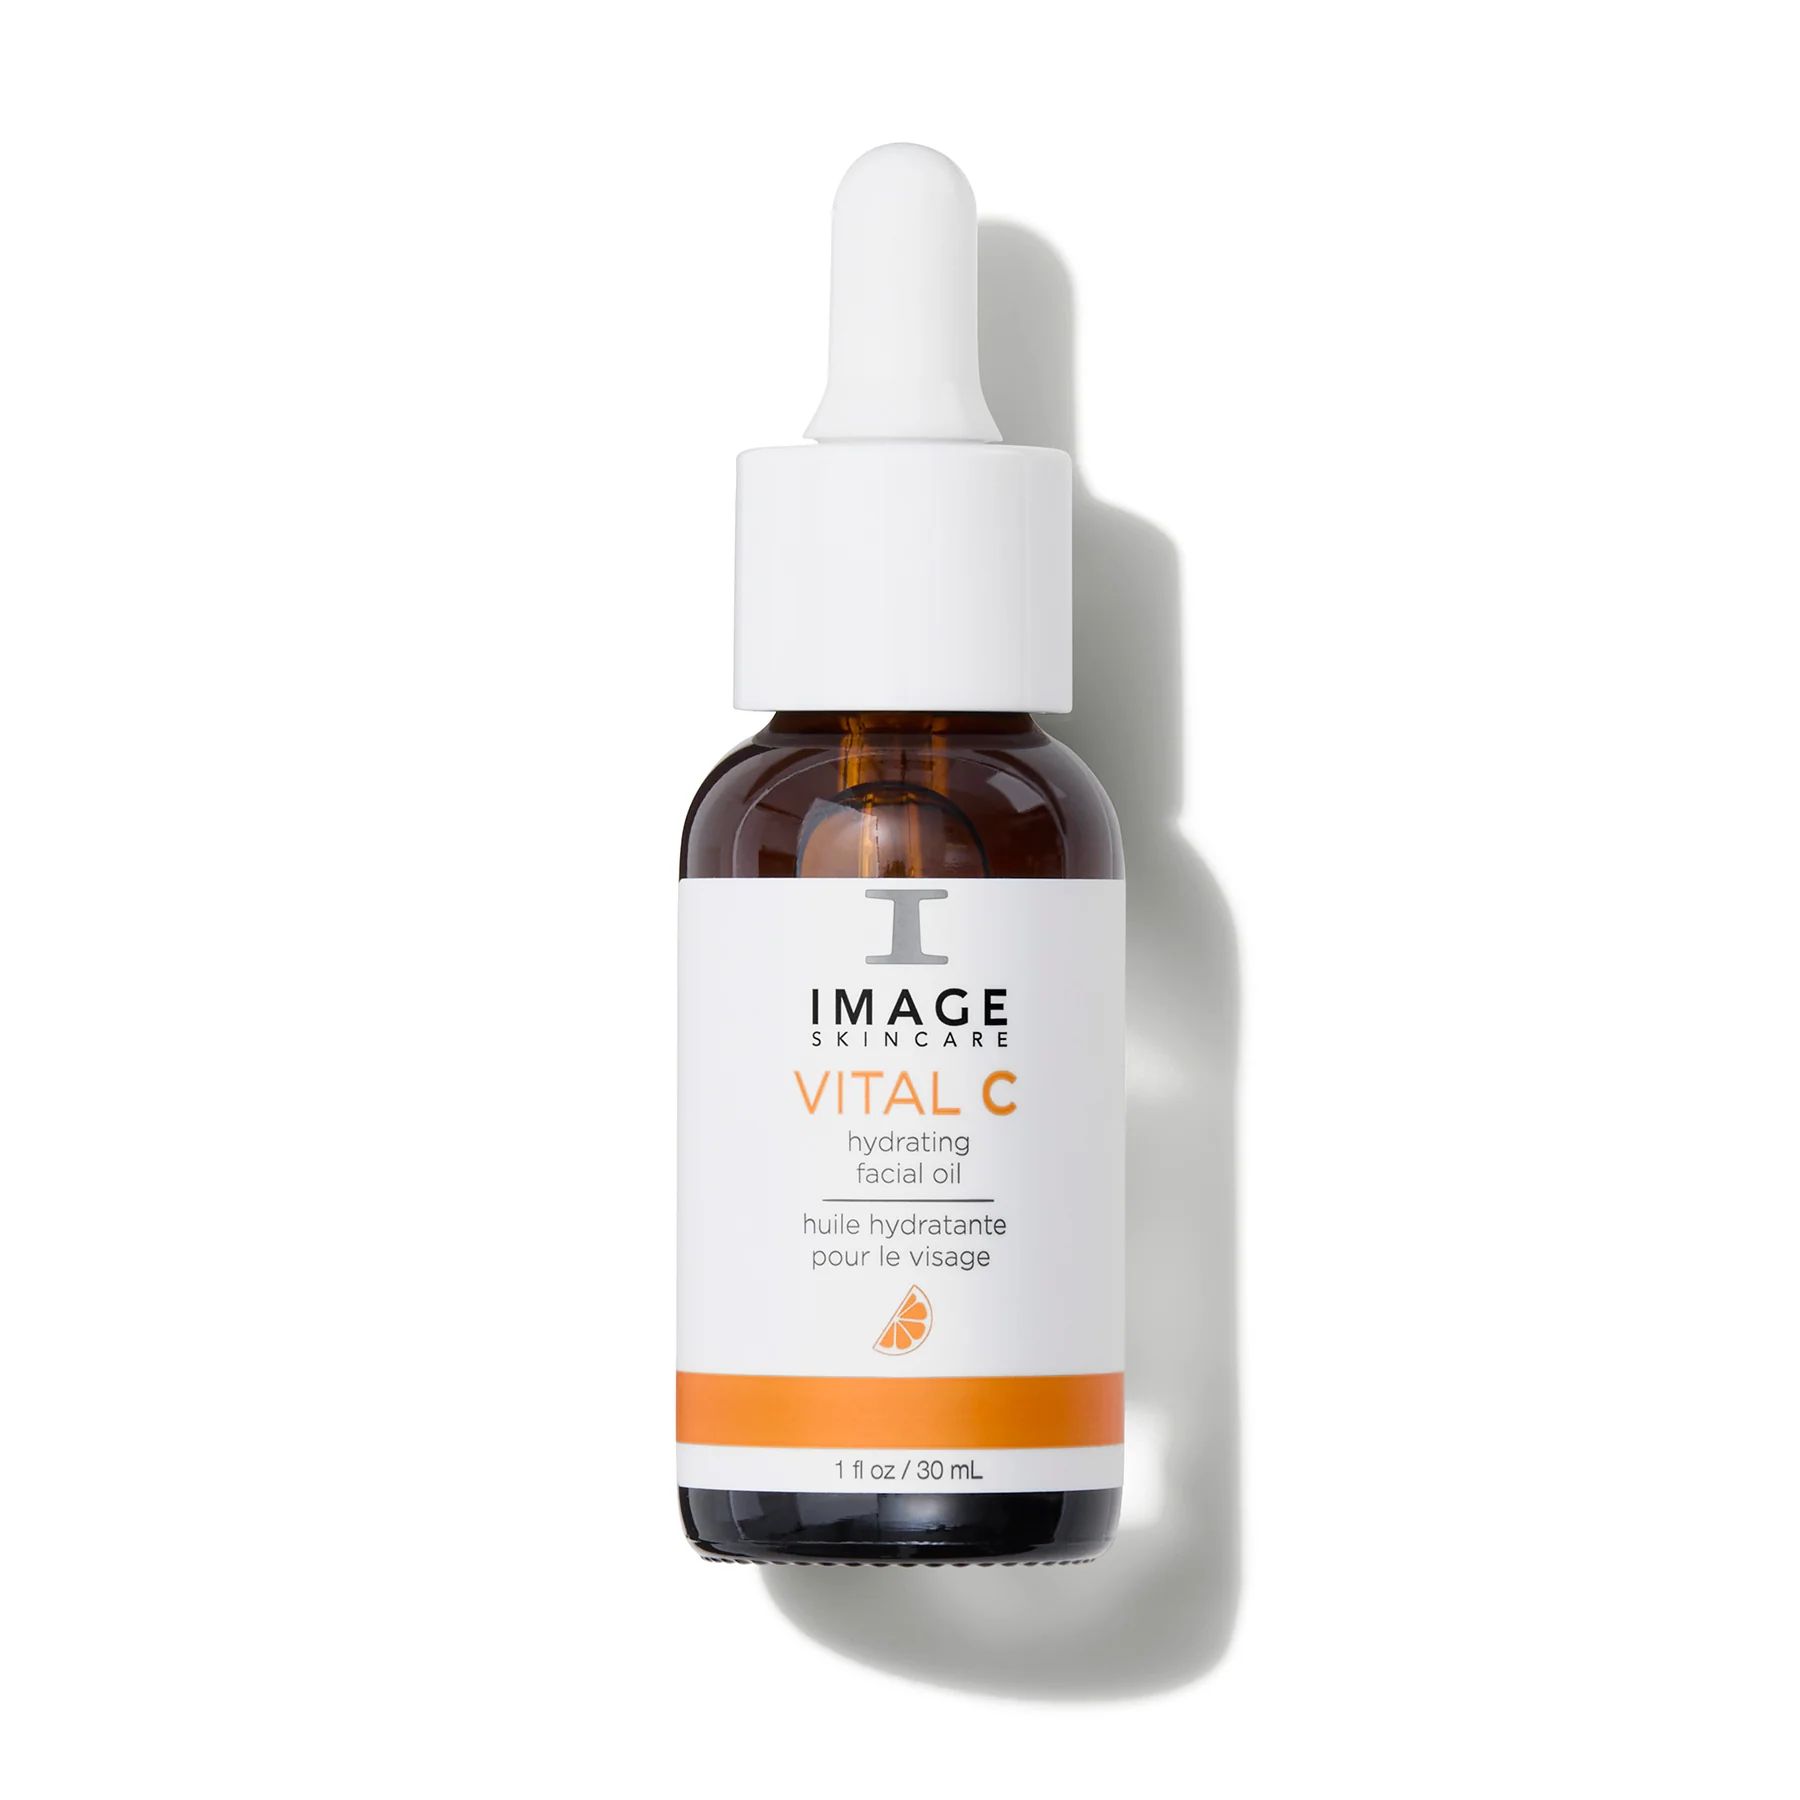 VITAL C hydrating facial oil | Image Skincare